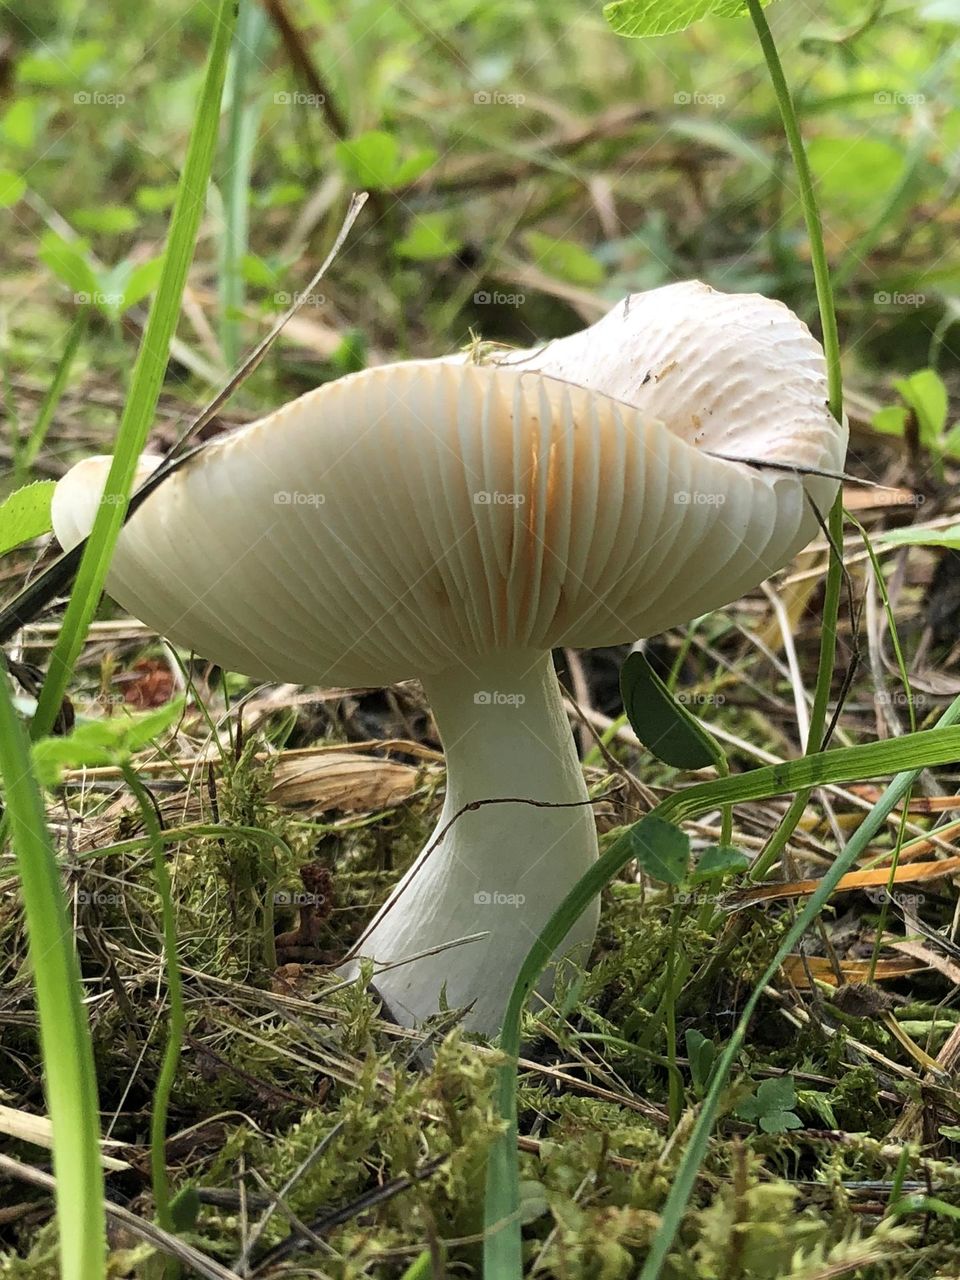 White mushroom growing in the wild 